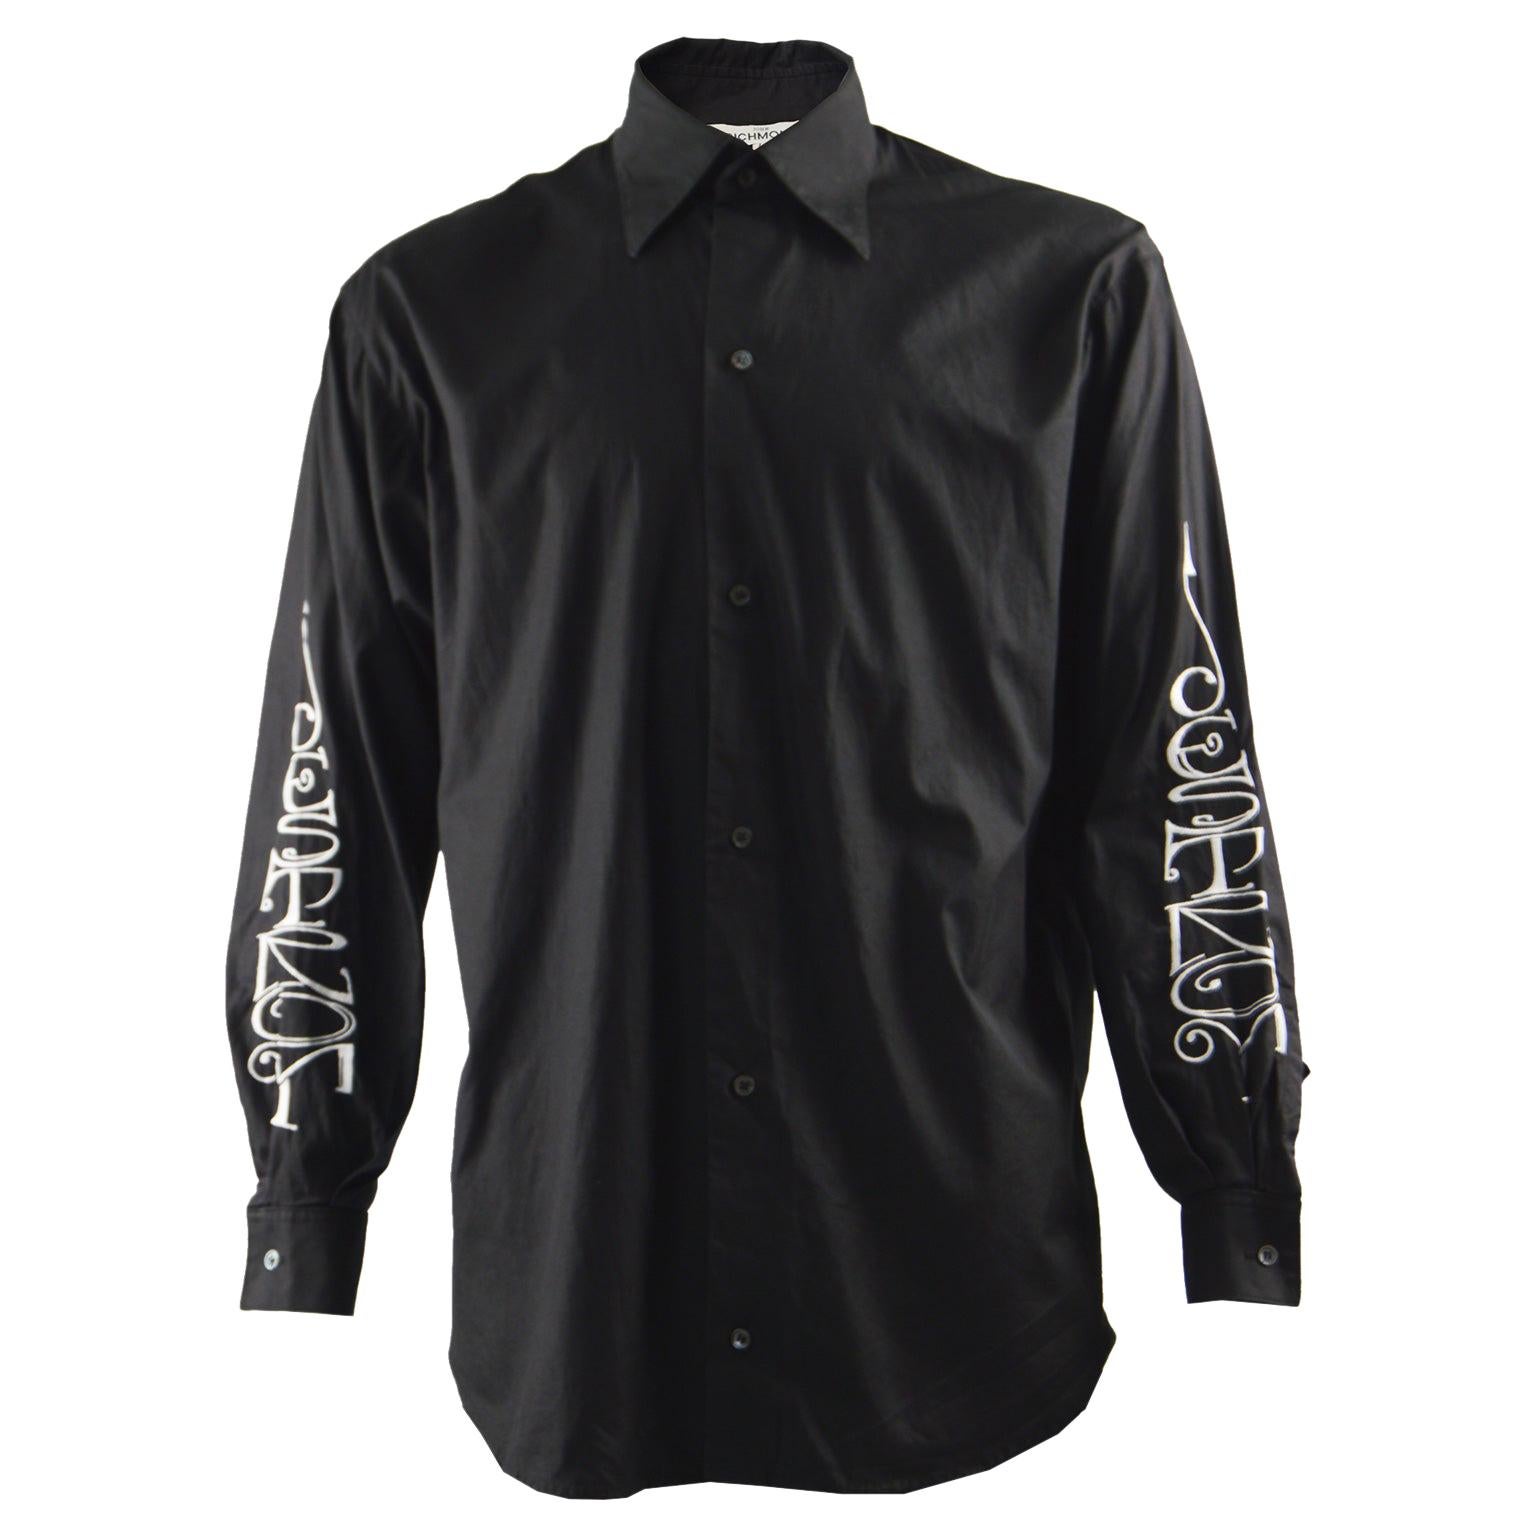 John Richmond Vintage 'Destroy' Embroidered Mens Black Cotton Shirt, 1990s